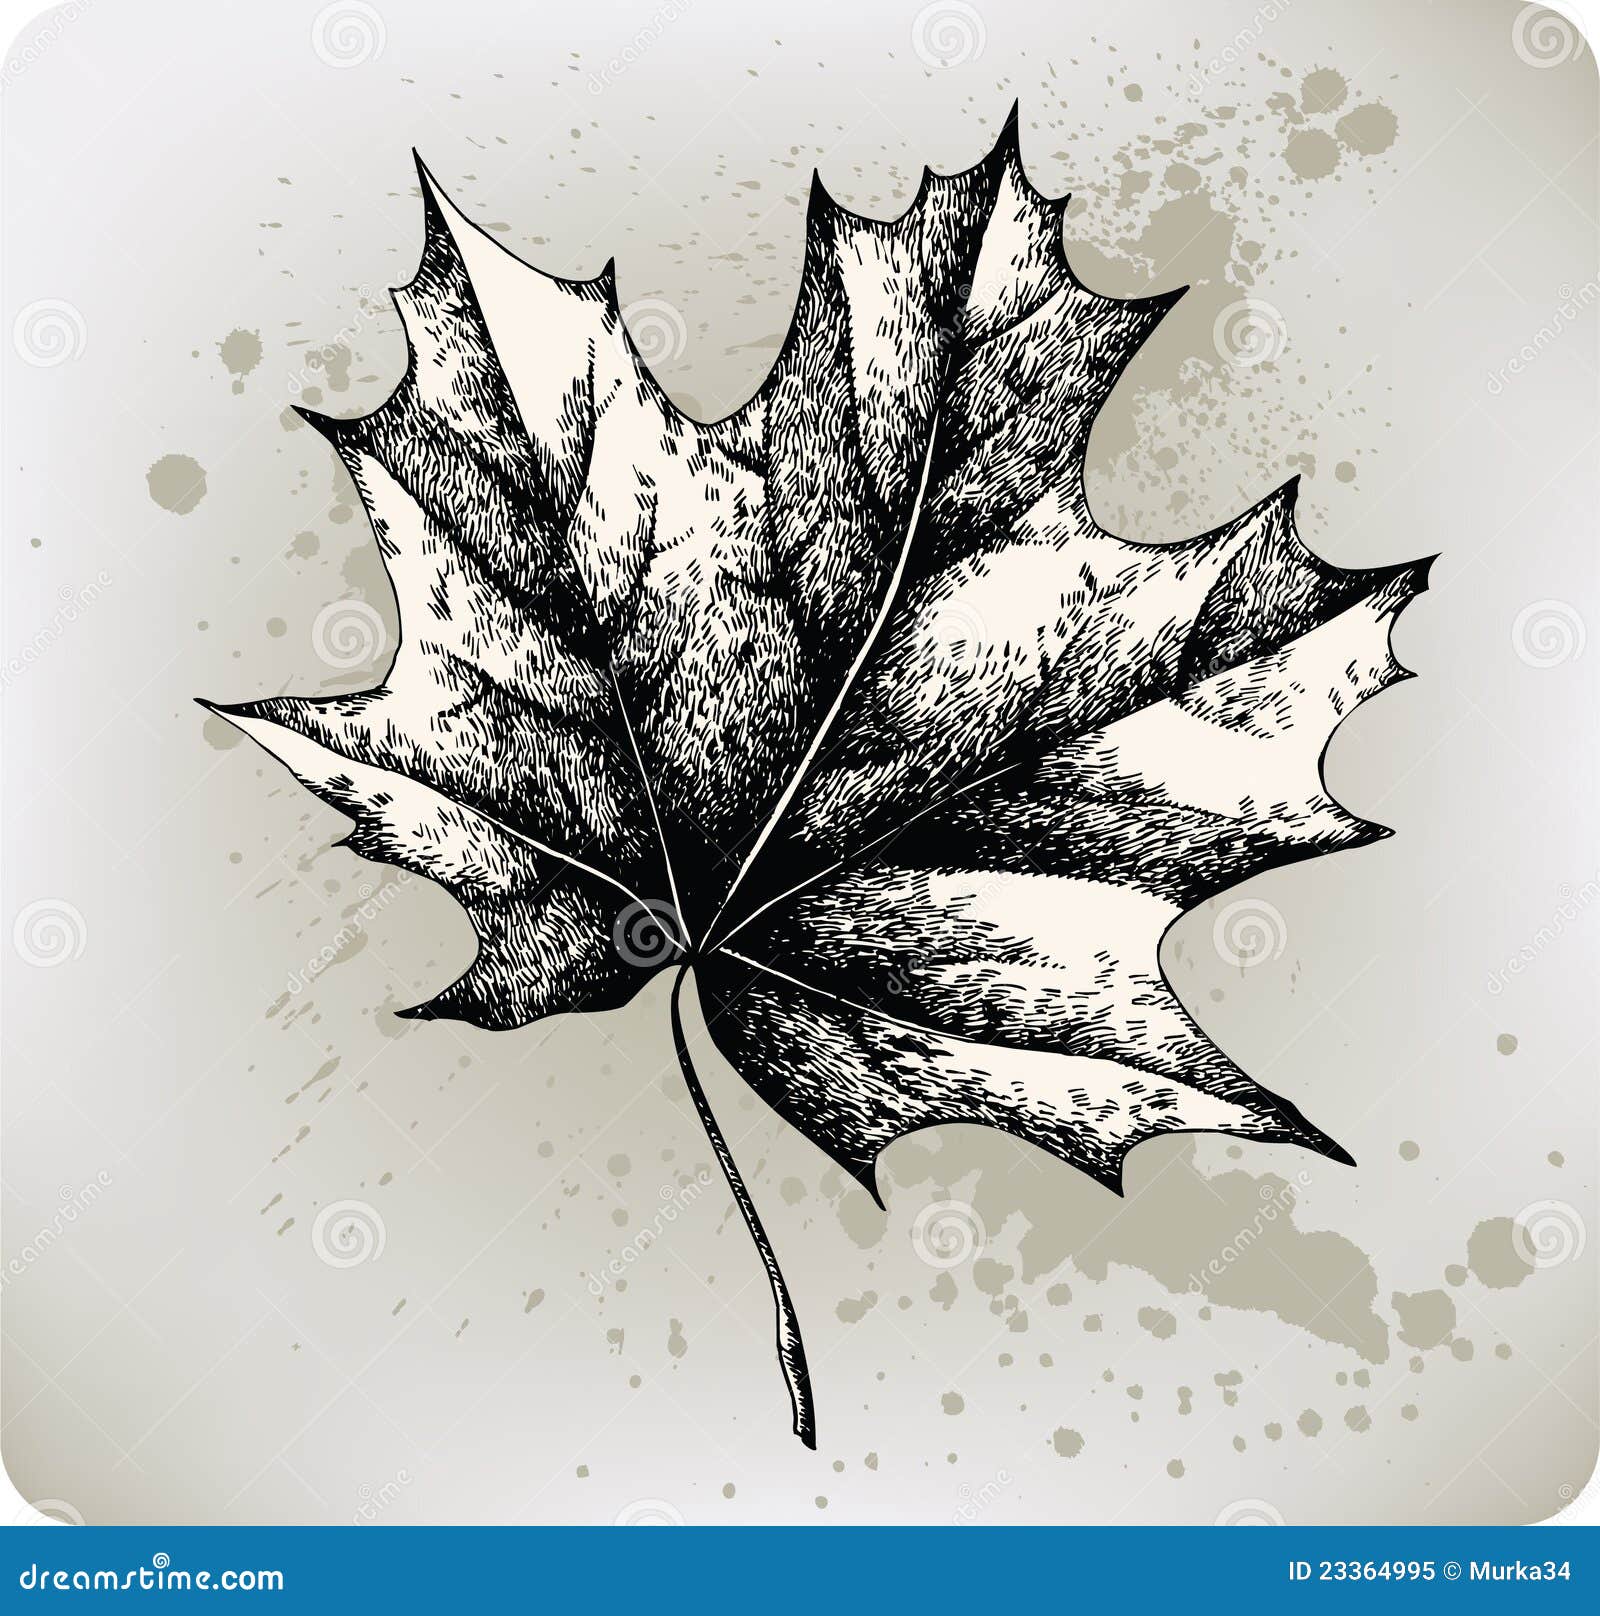 Maple leaf. Vector vintage engraved illustration. Isolated on